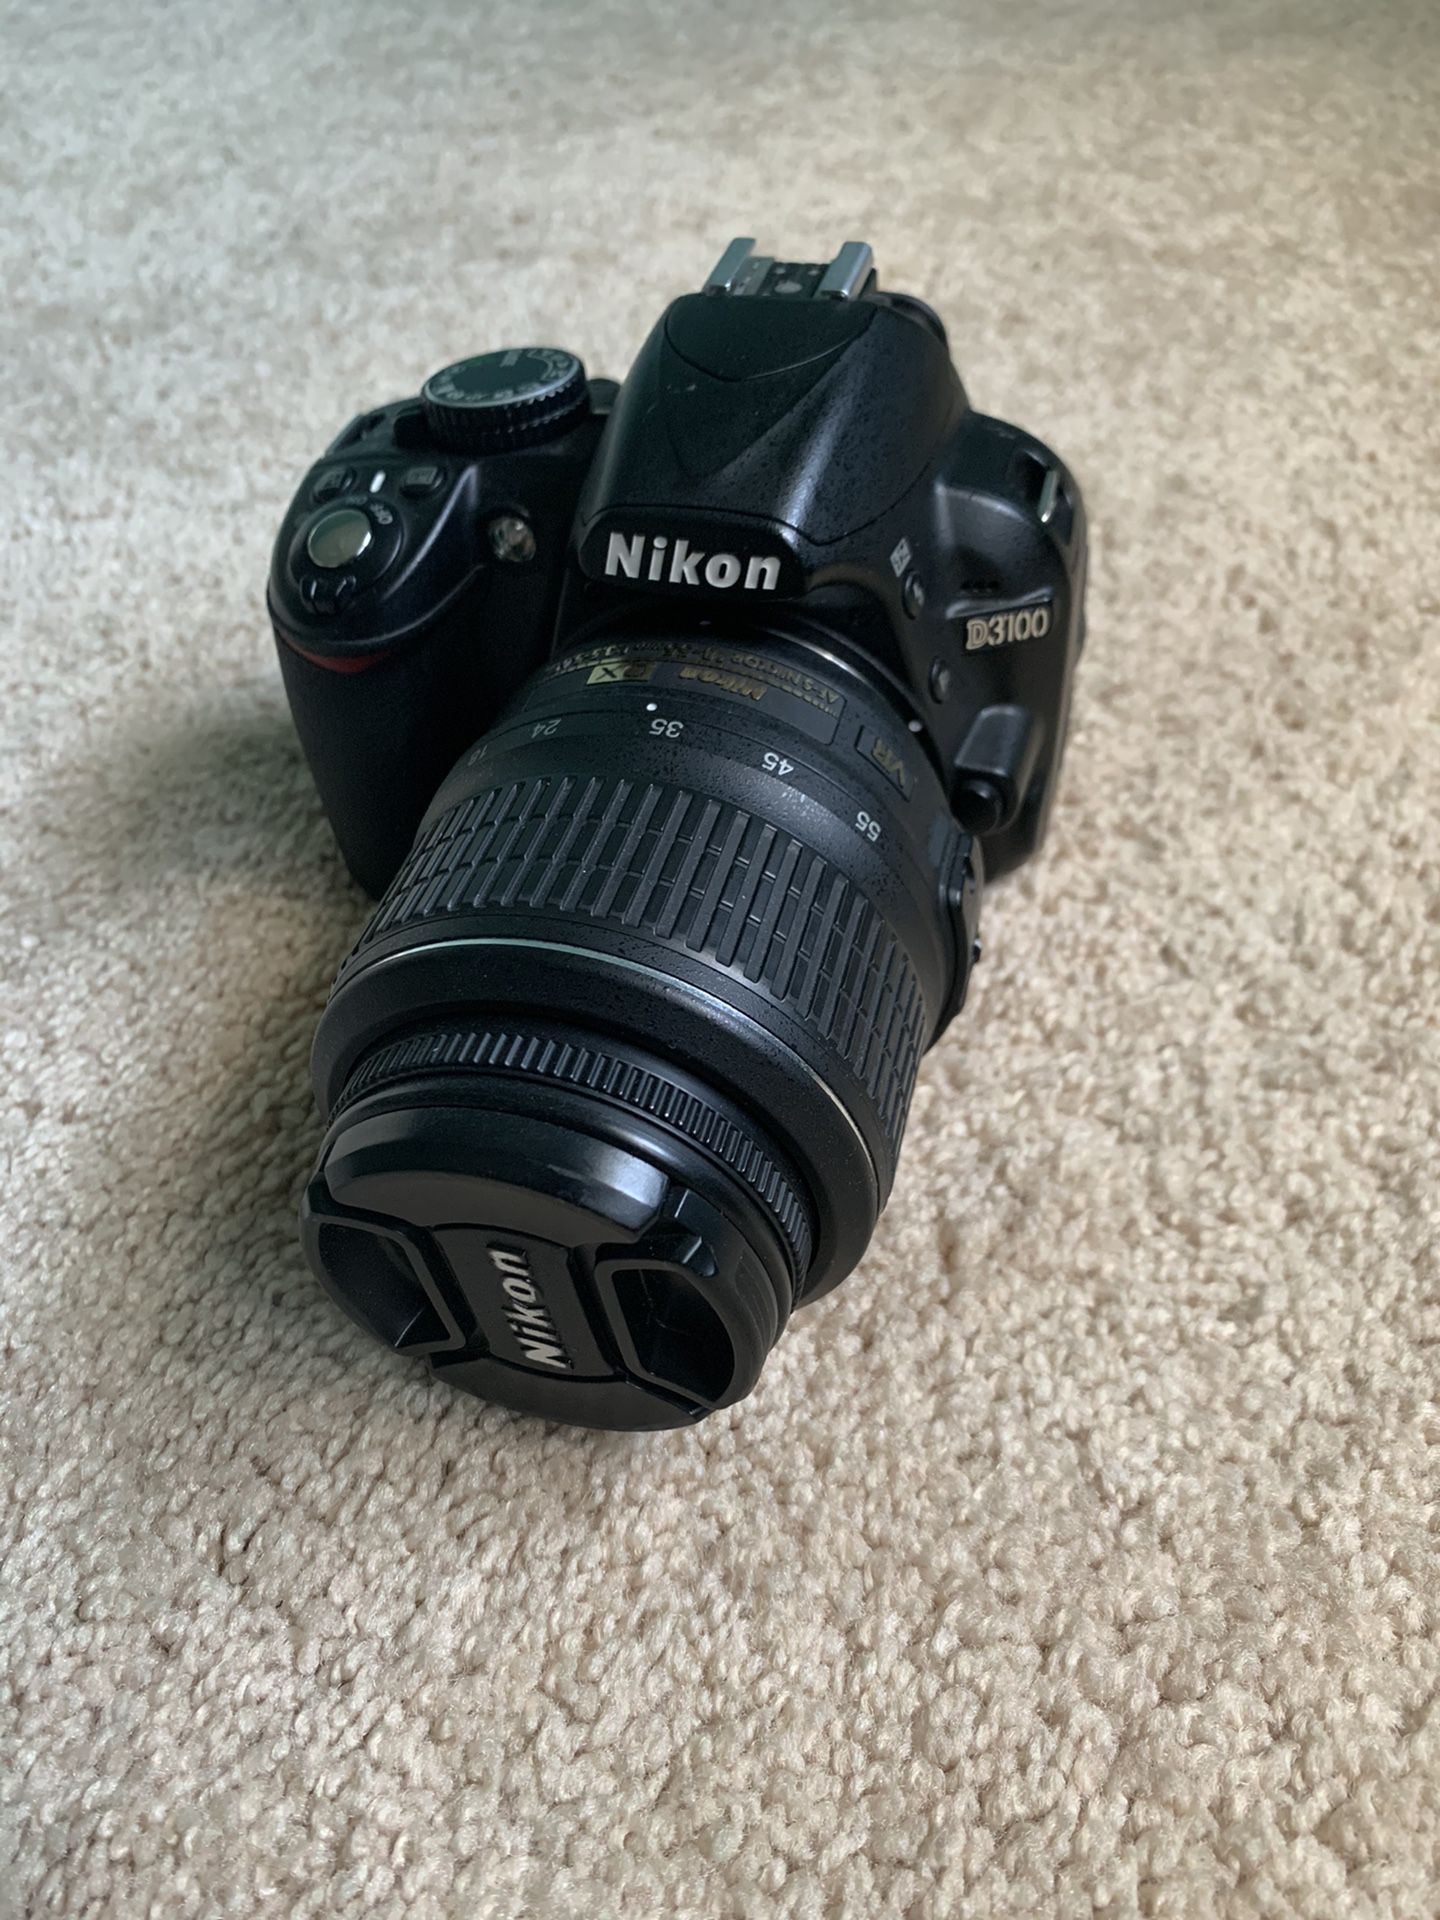 Nikon D3100 with lens